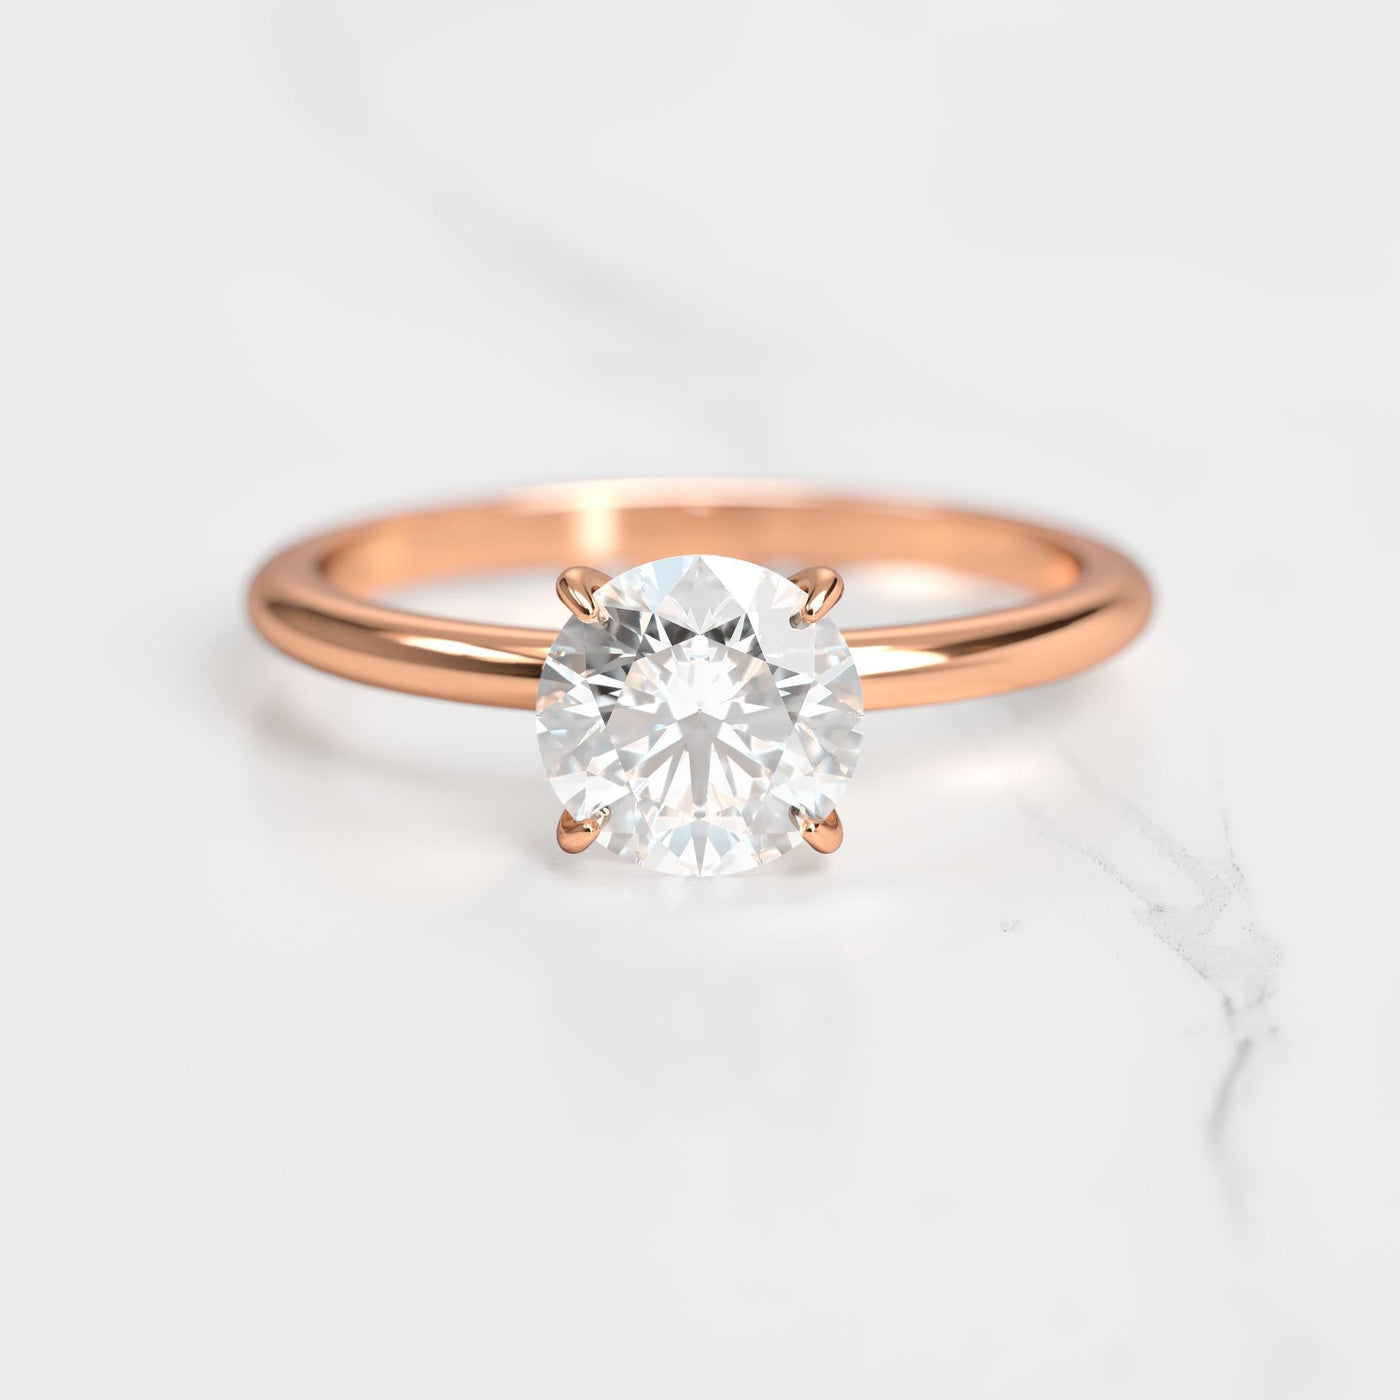 Round tapered solitaire diamond ring